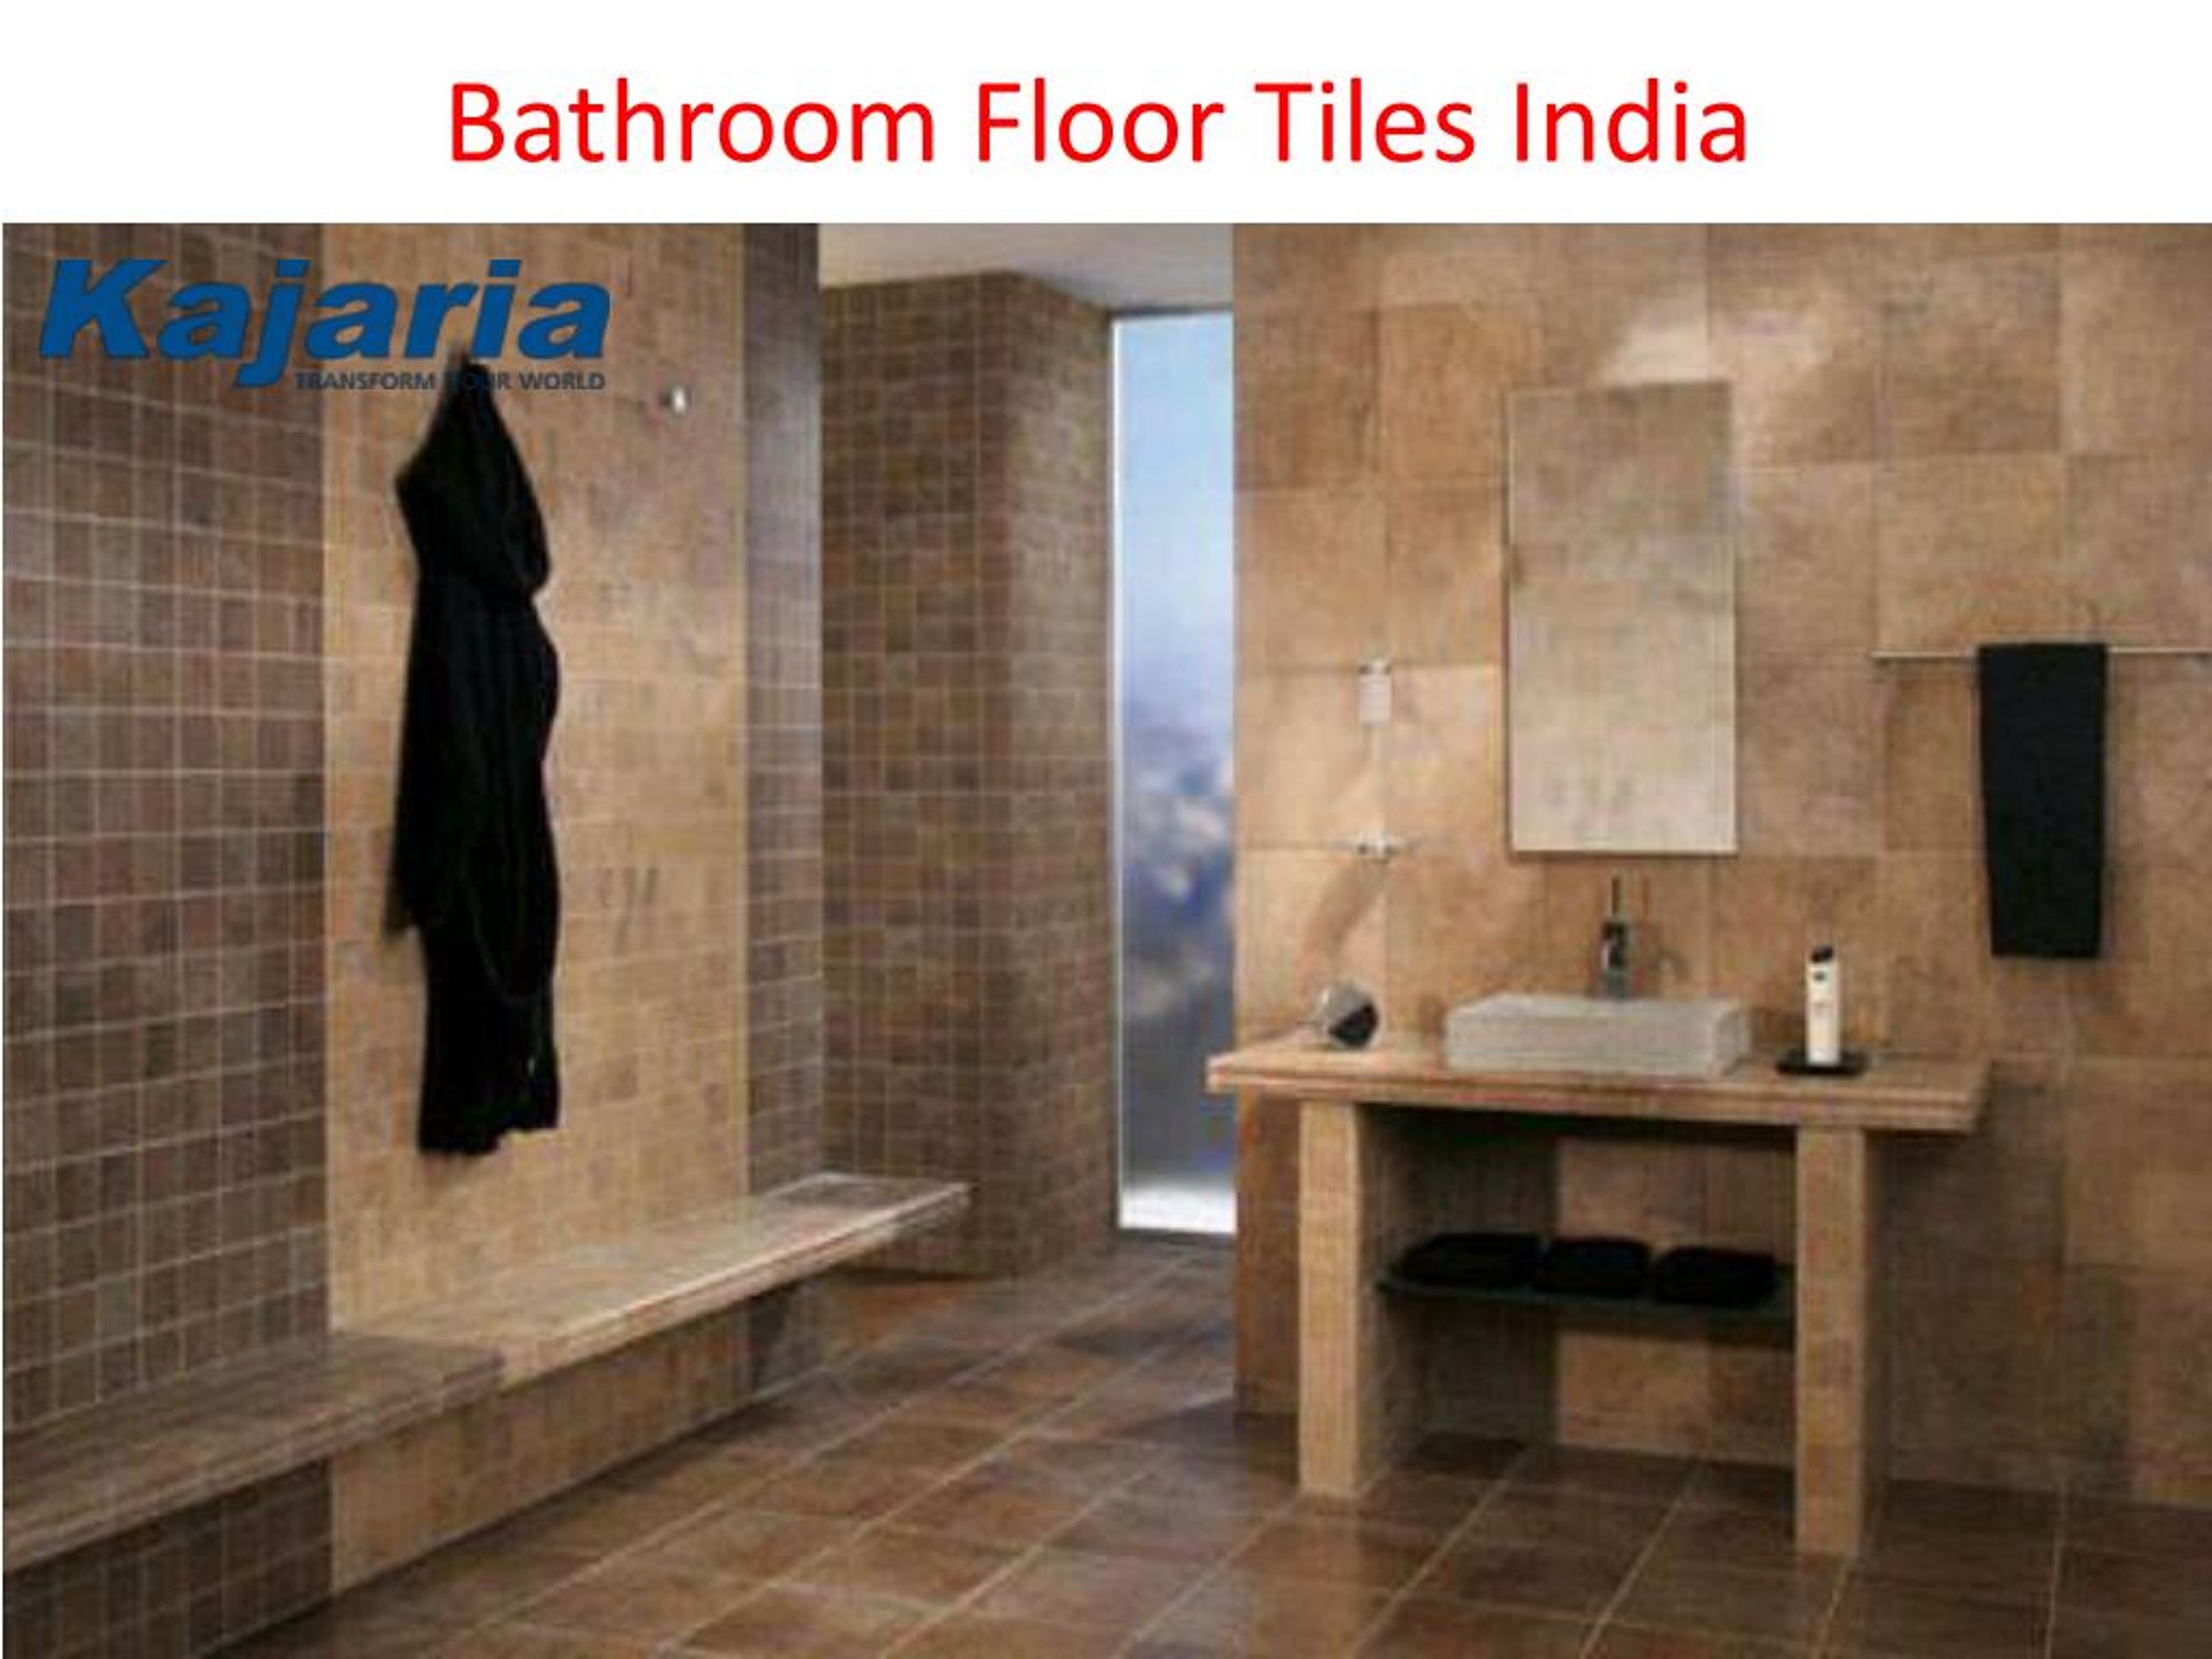 Ppt Bathroom Floor Tiles India Powerpoint Presentation Free Download Id 7887368,Front Door Small Porch Roof Designs